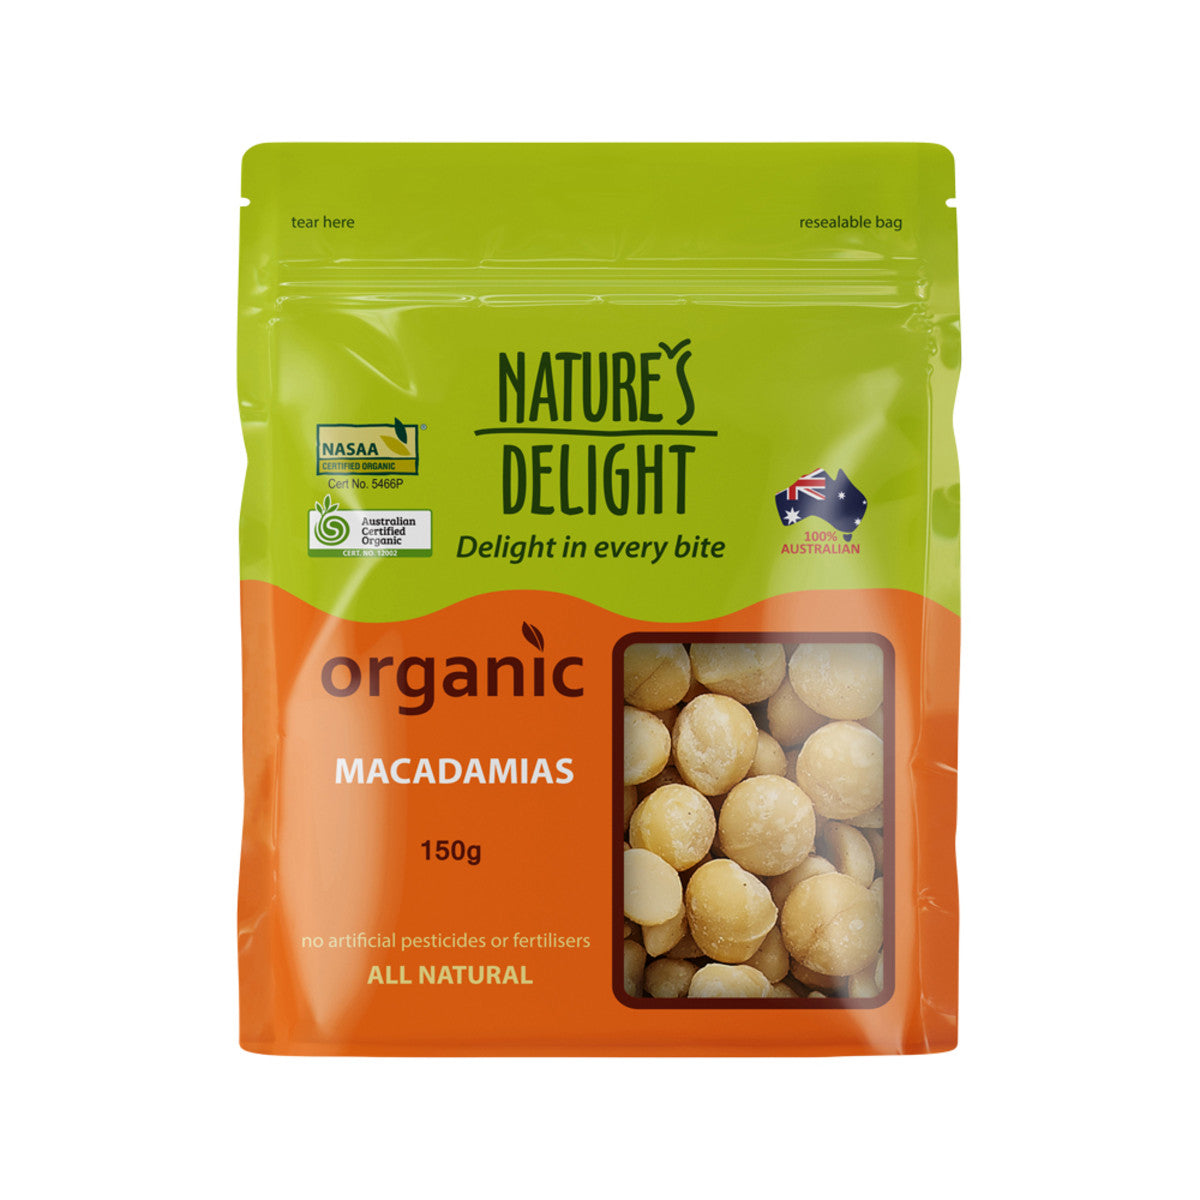 Nature's Delight Macadamias 150g, Australian Certified Organic